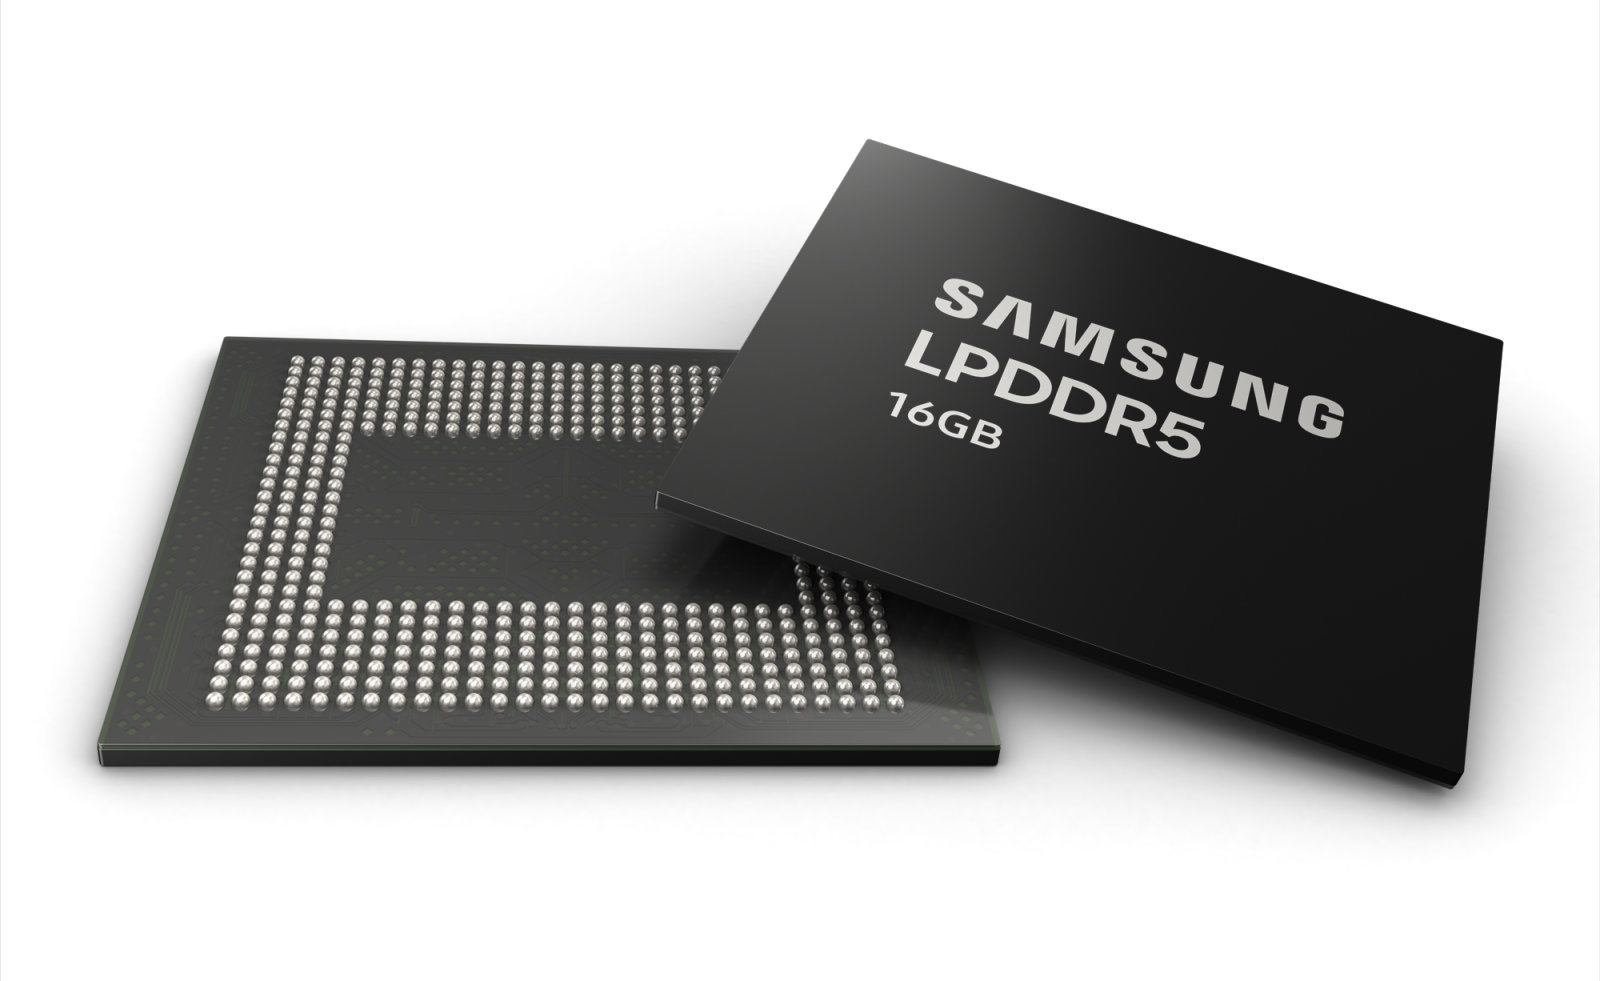 New Samsung smartphones will receive 16 GB RAM chips